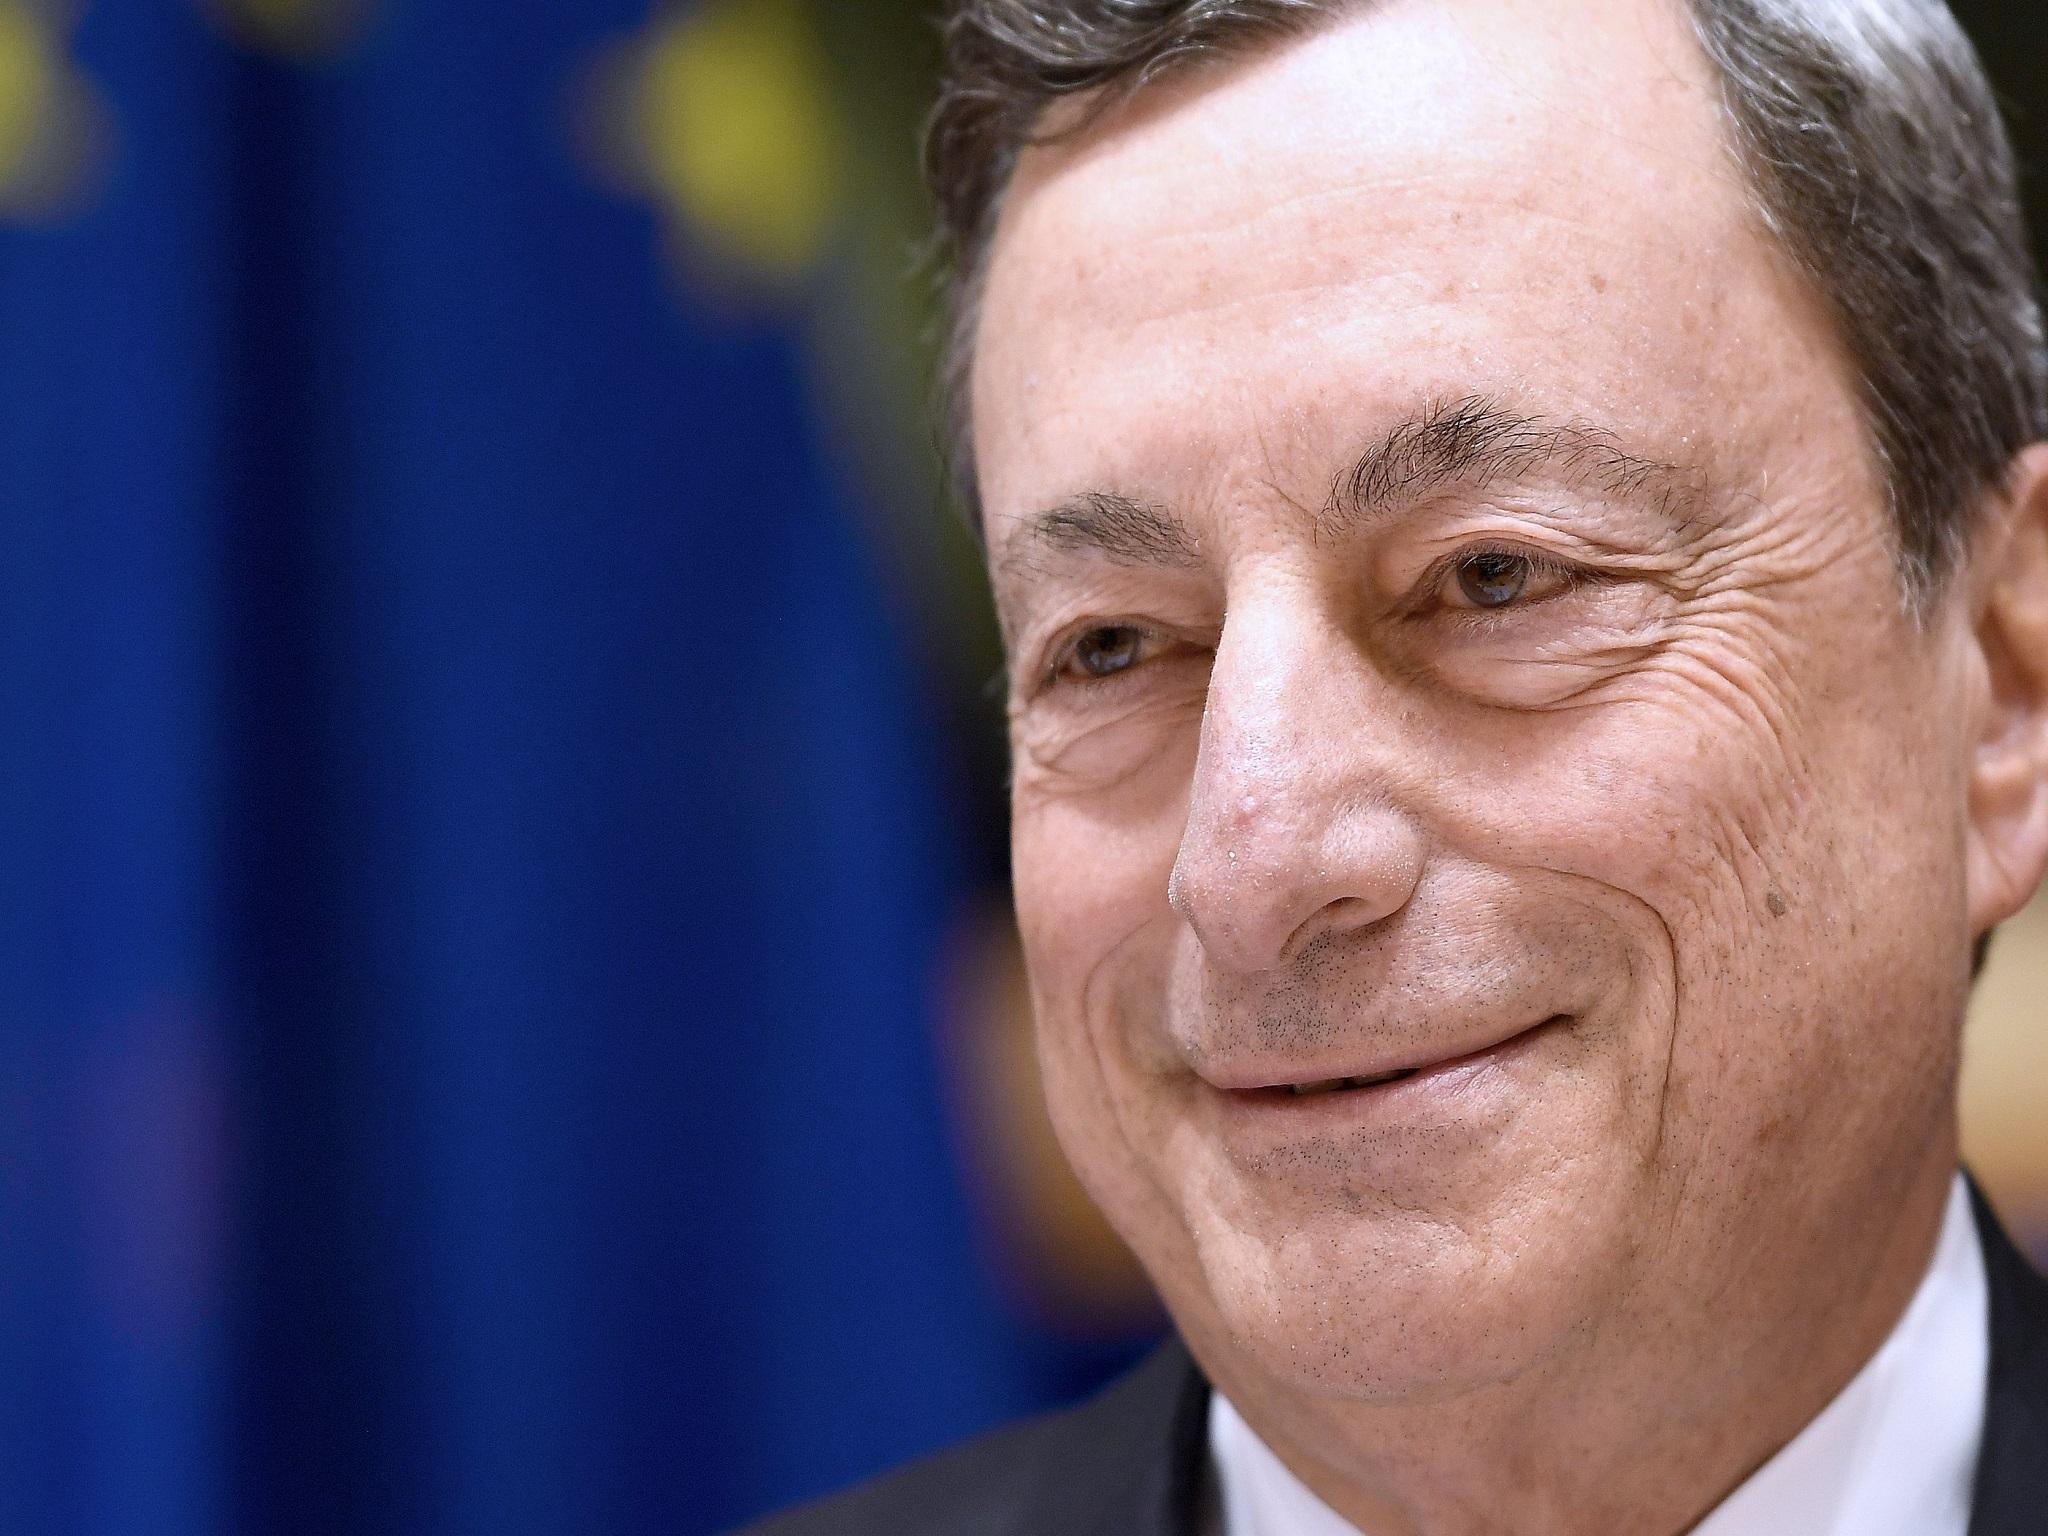 ECB president Mario Draghi